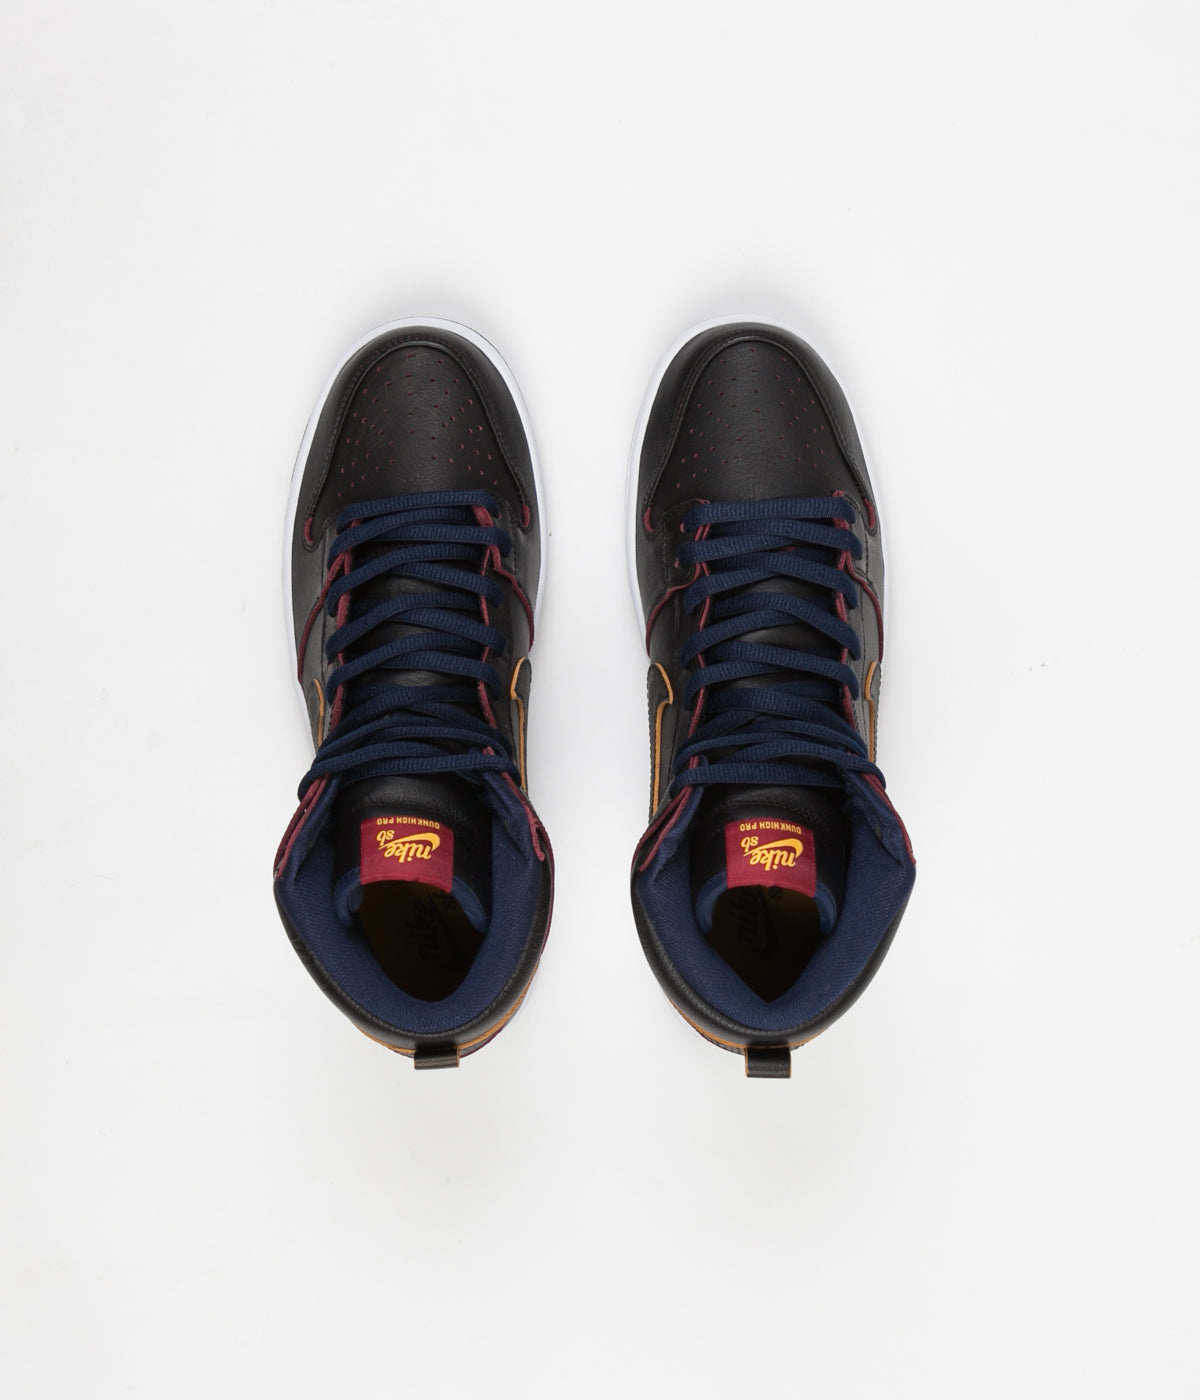 Nike SB Dunk Pro NBA Shoes - Black - College Navy - R Flatspot